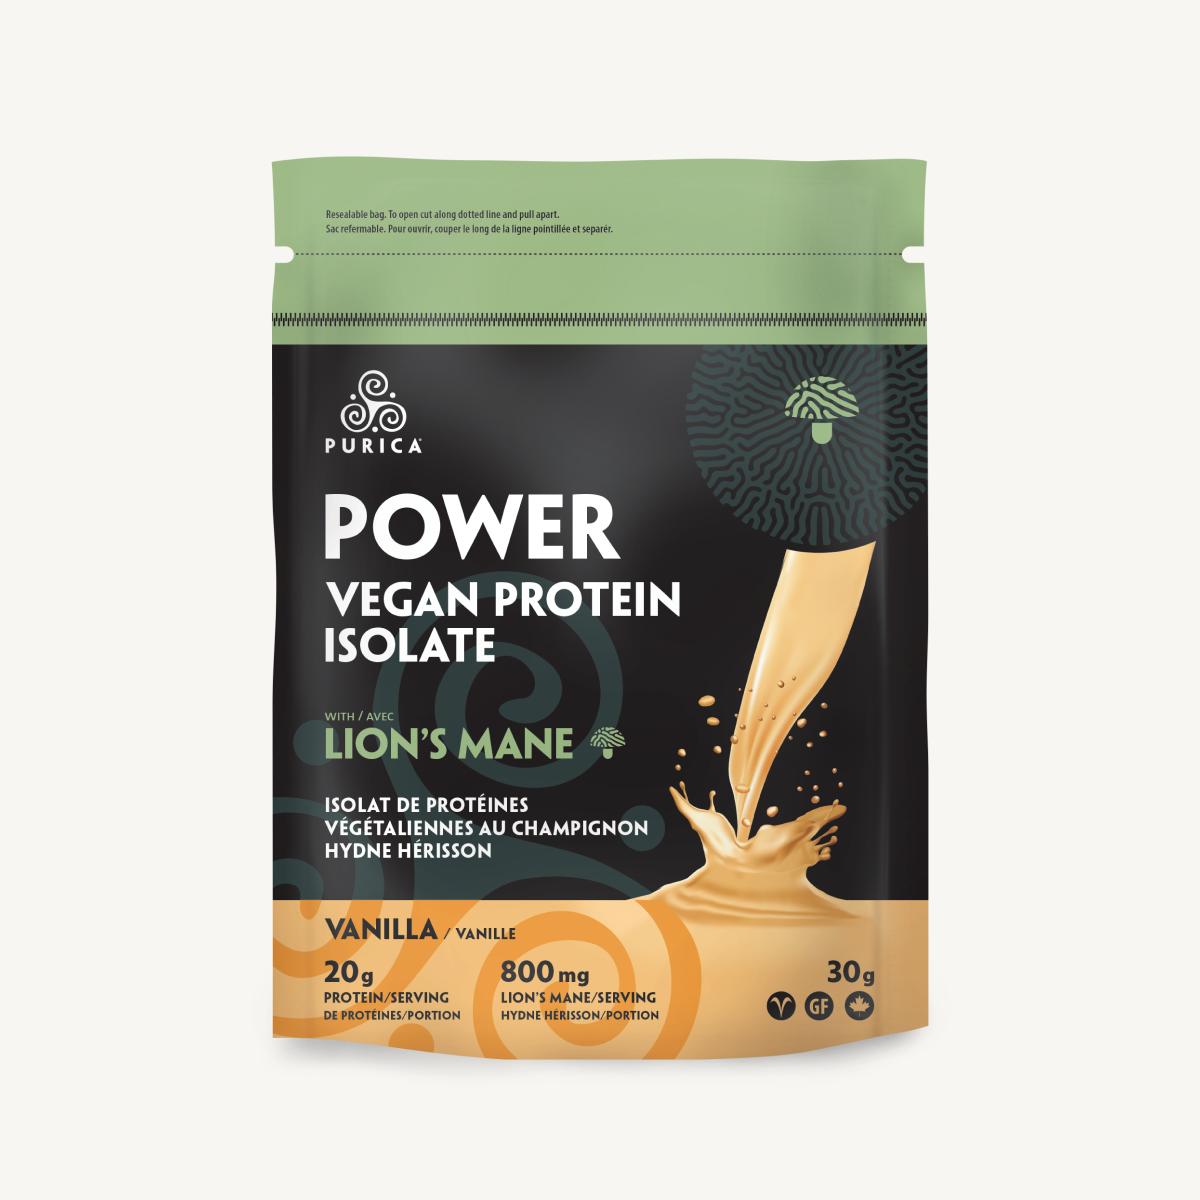 Vegan Protein with Lion's Mane